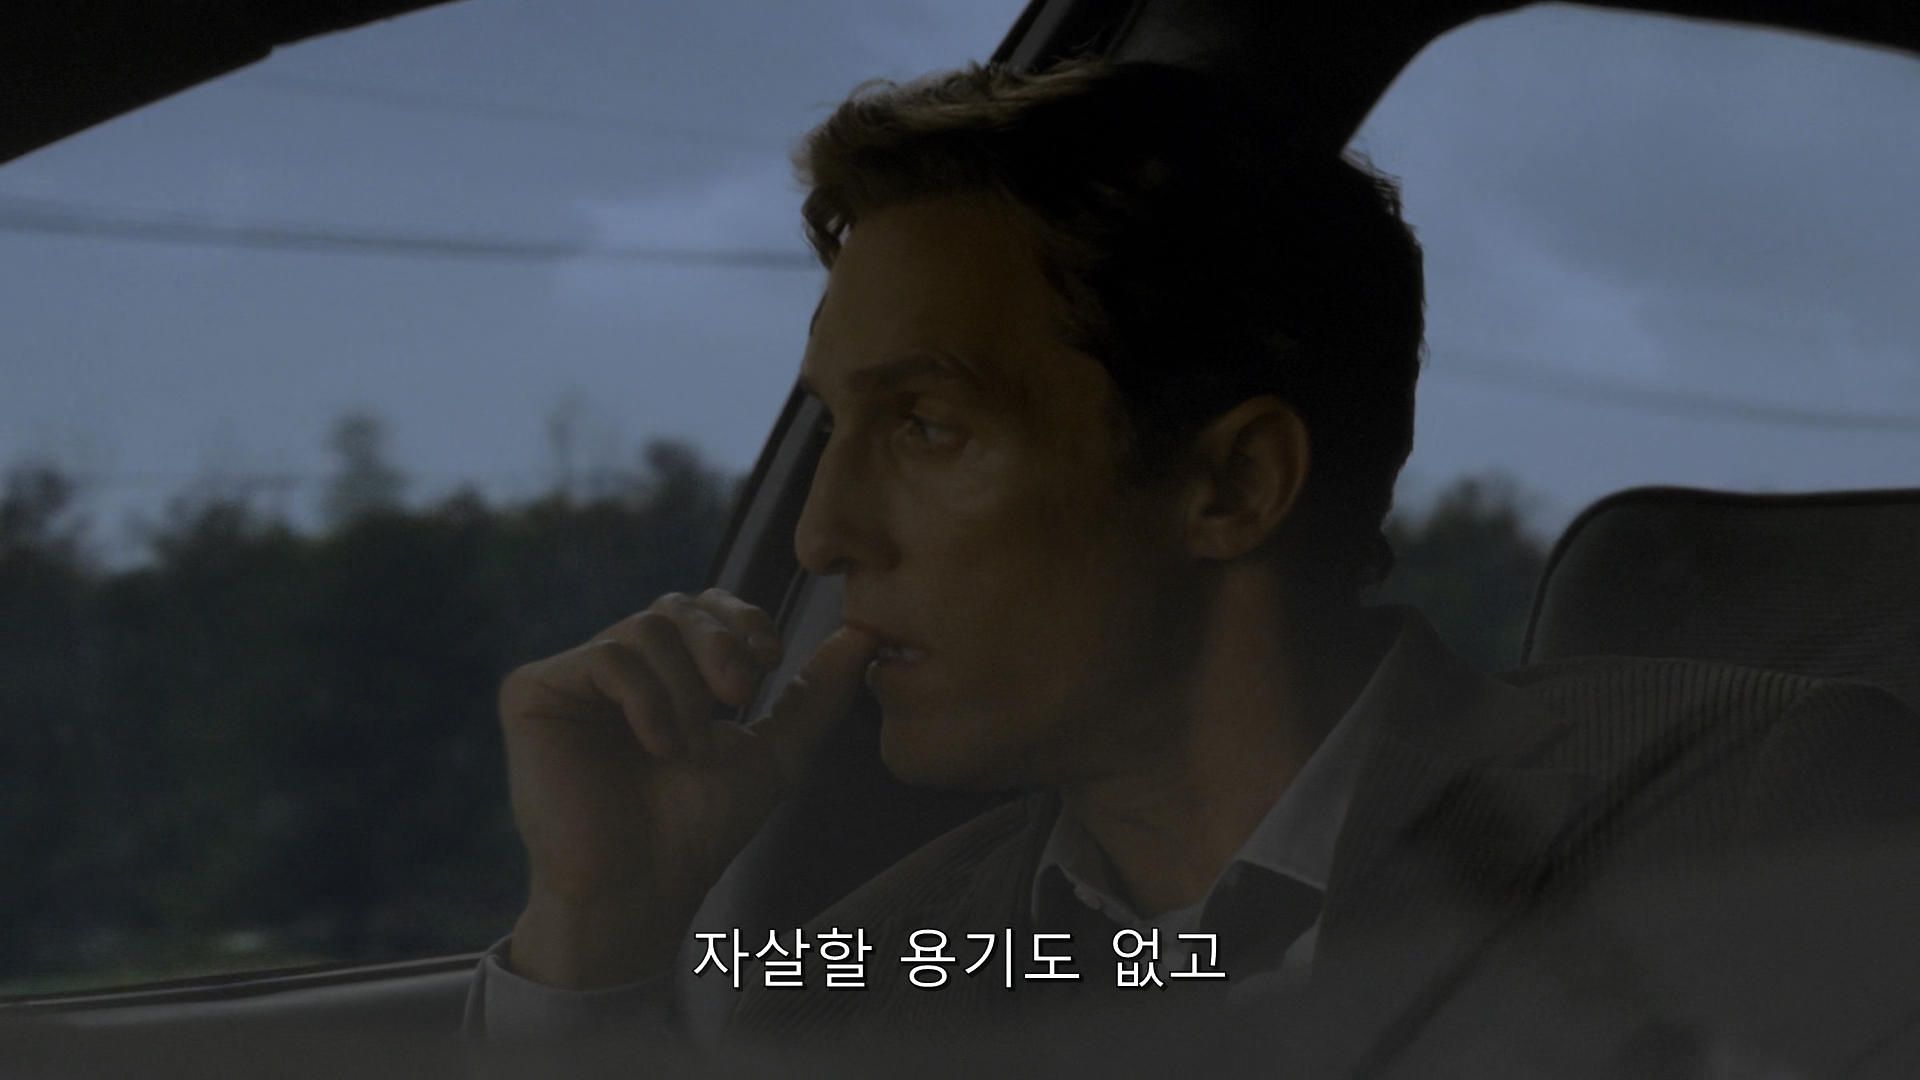 True Detective (2014) - S01E01 - The Long Bright Dark (1080p BluRay x265 afm72).mkv_001040466.jpg